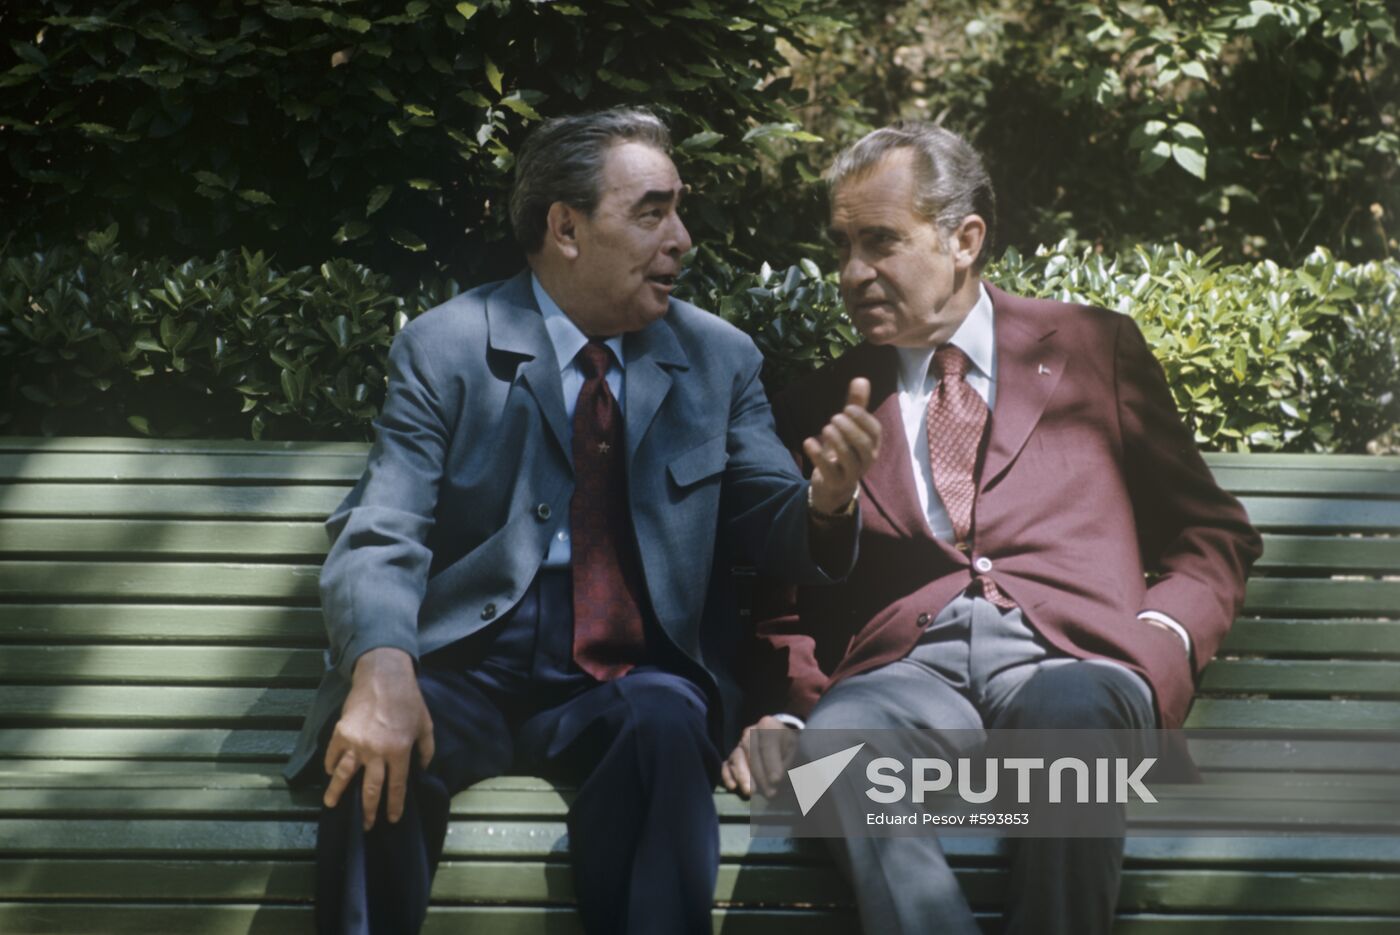 U.S. President Richard Nixon visits USSR